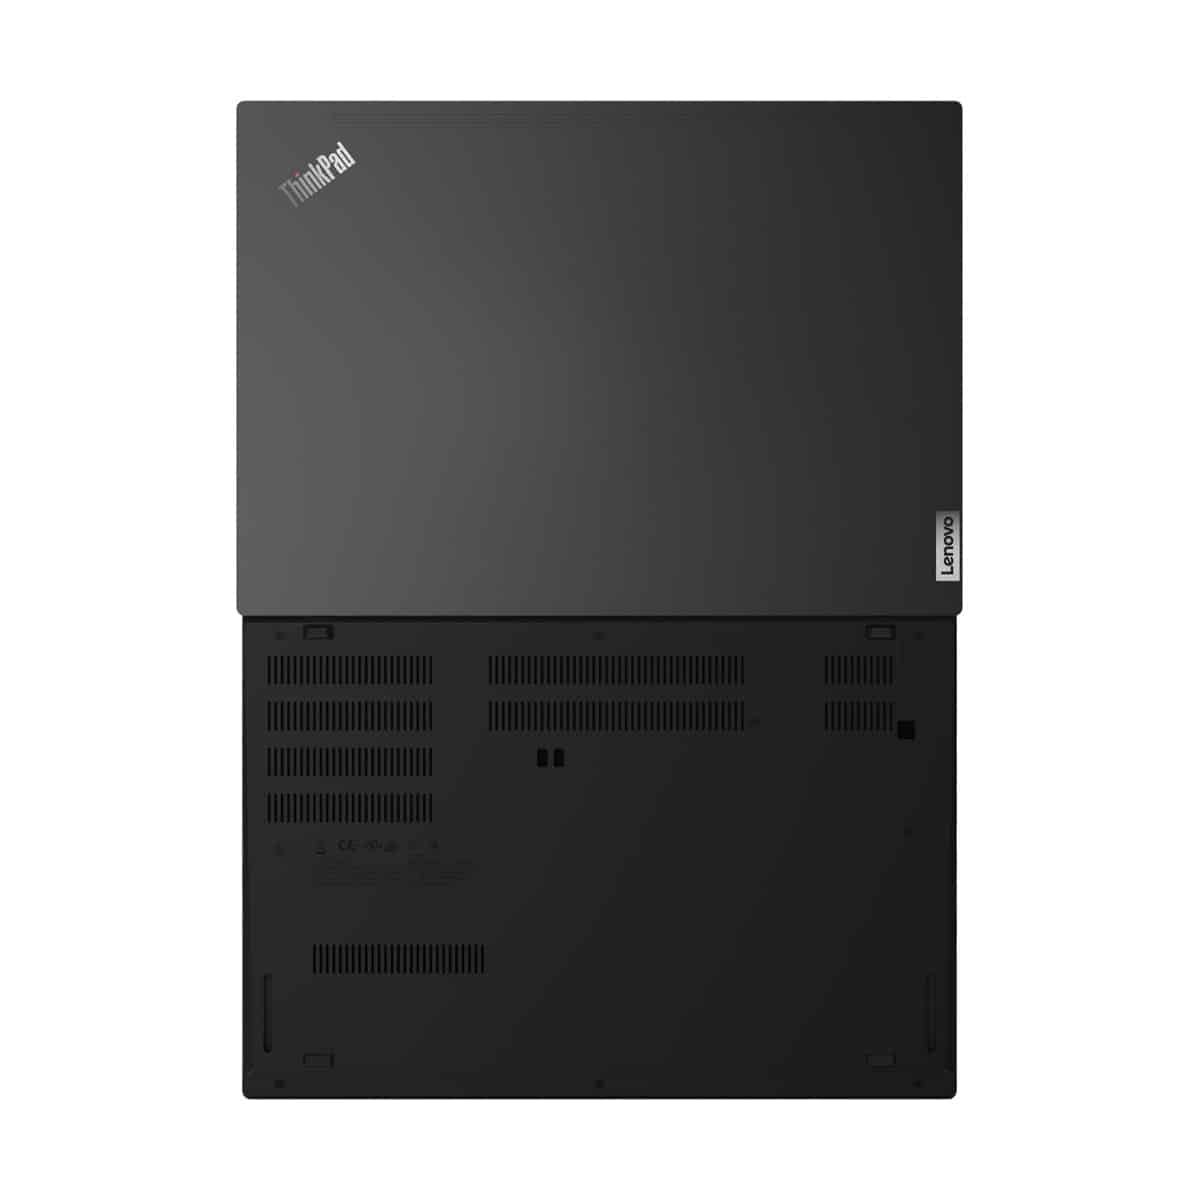 Lenovo ThinkPad L14 Gen 1 Black